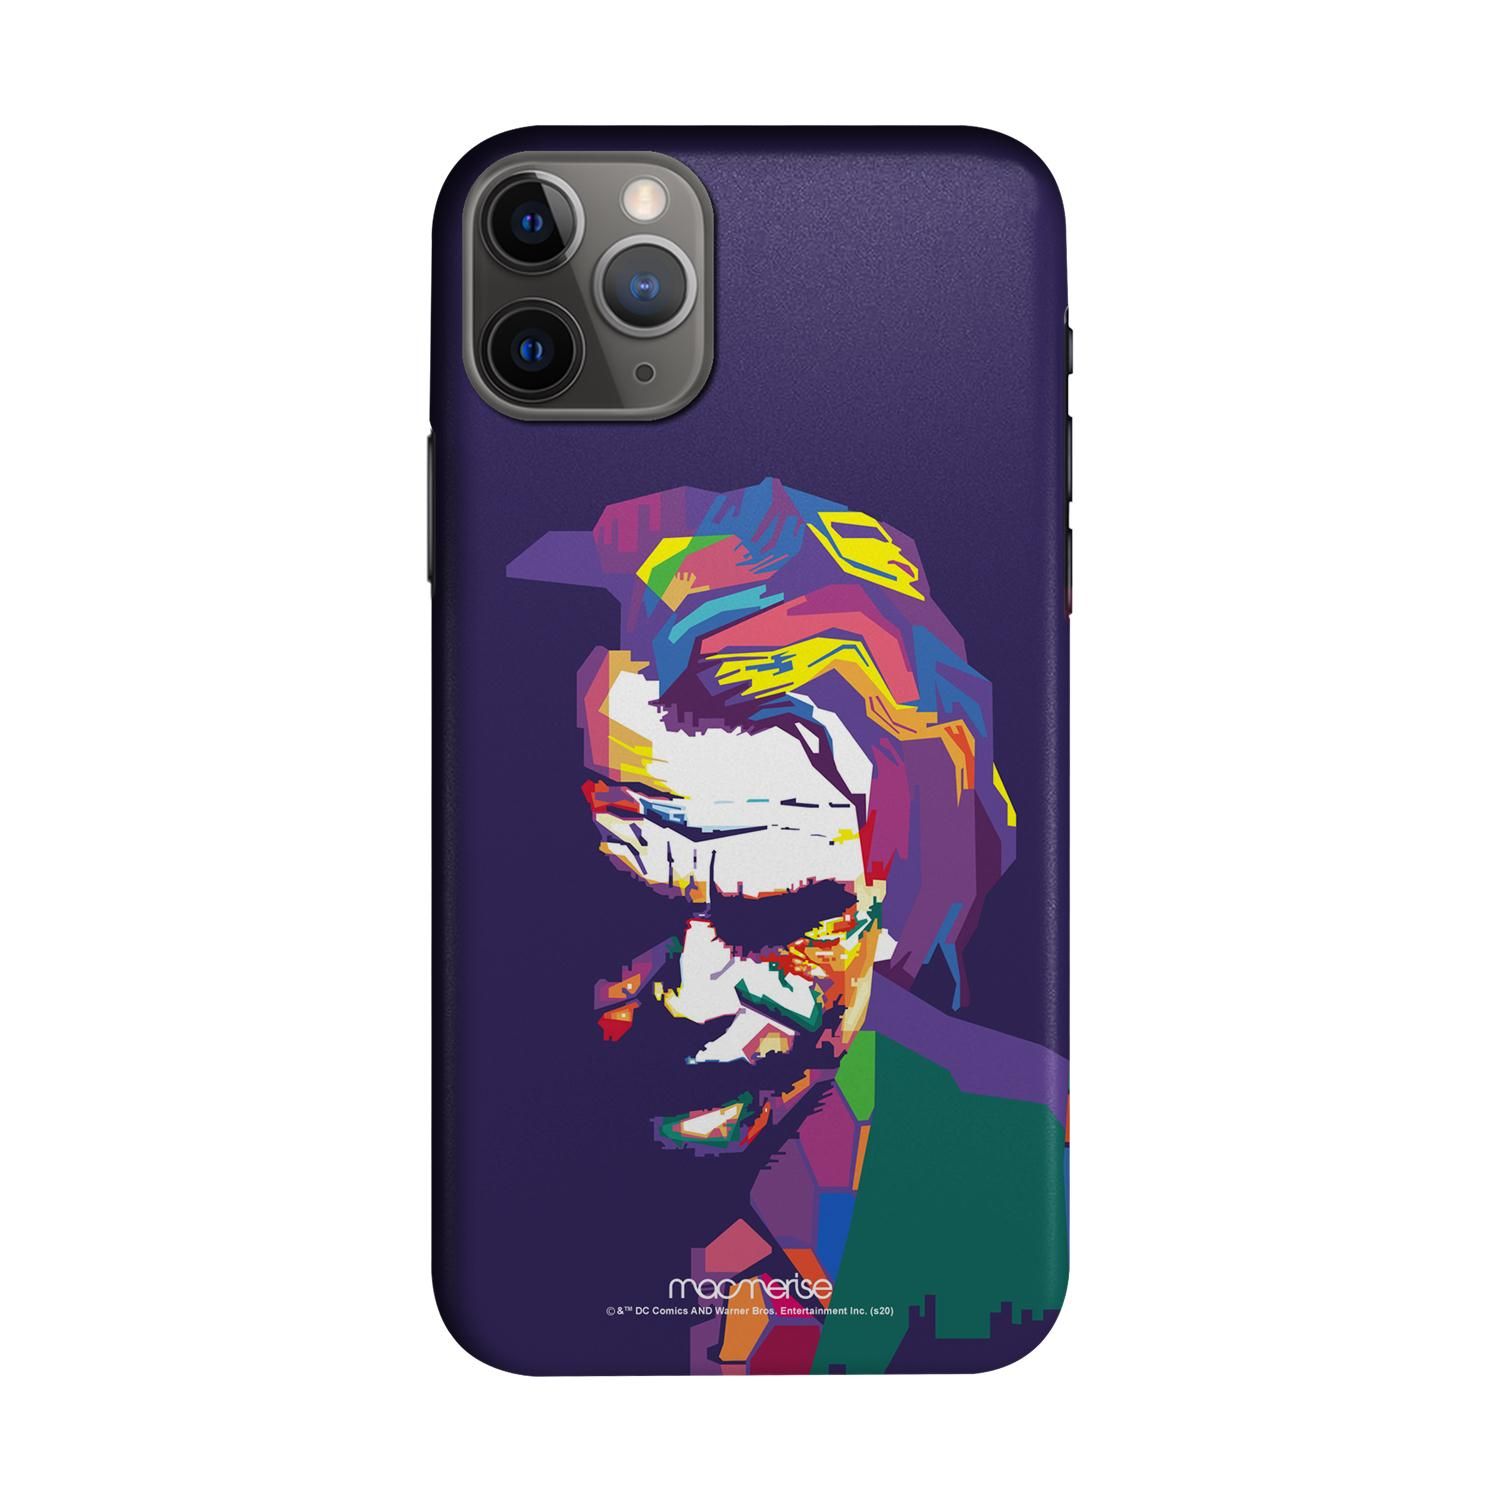 Buy Joker Art - Sleek Phone Case for iPhone 11 Pro Max Online